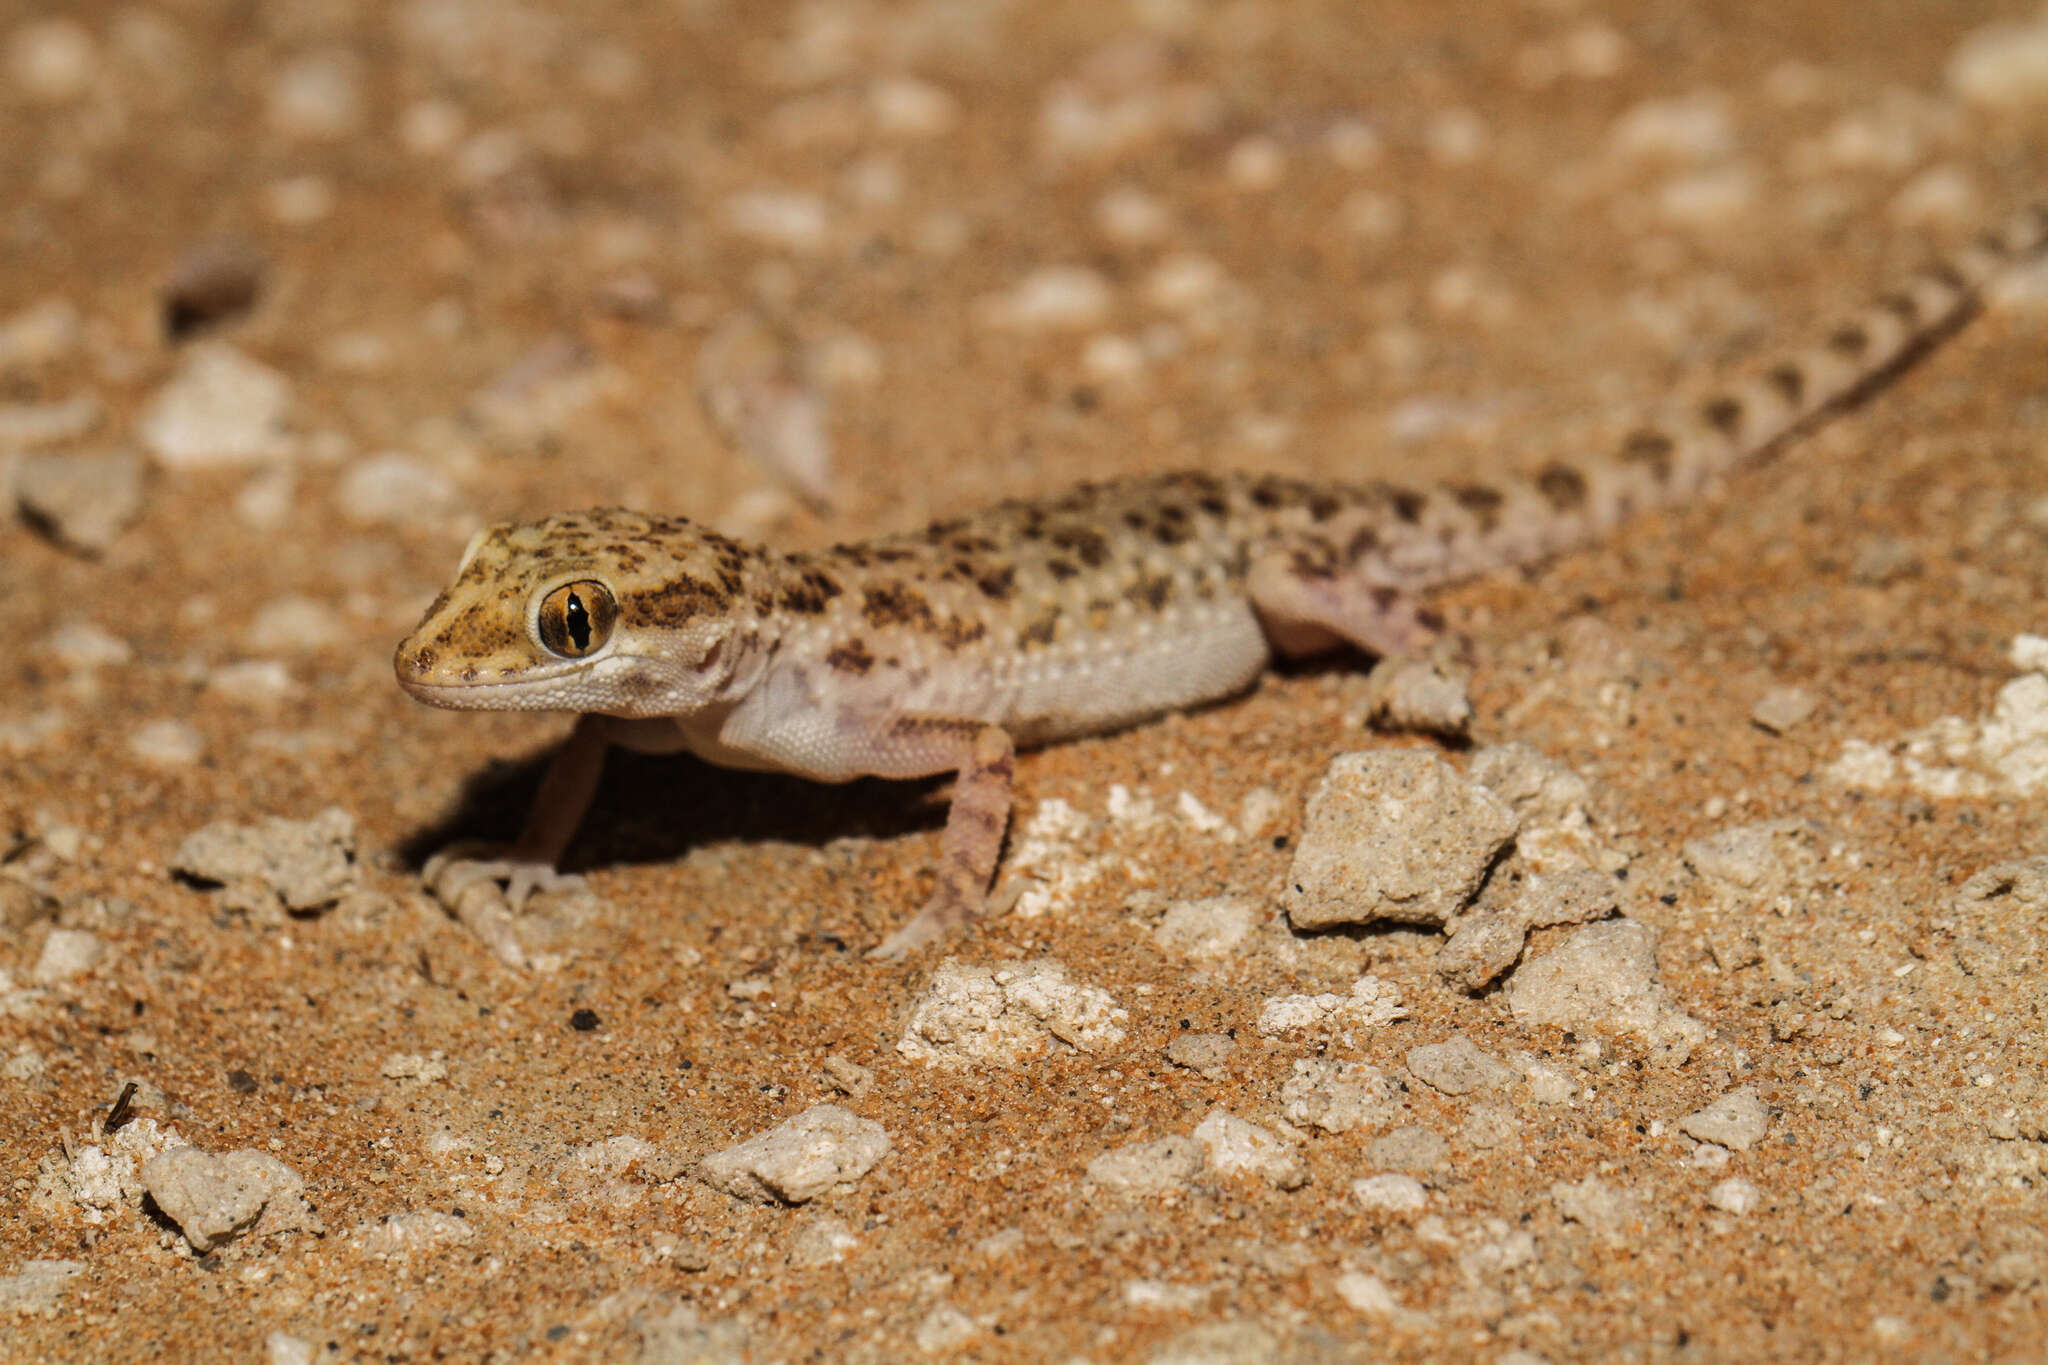 Image of Baiuch Rock Gecko